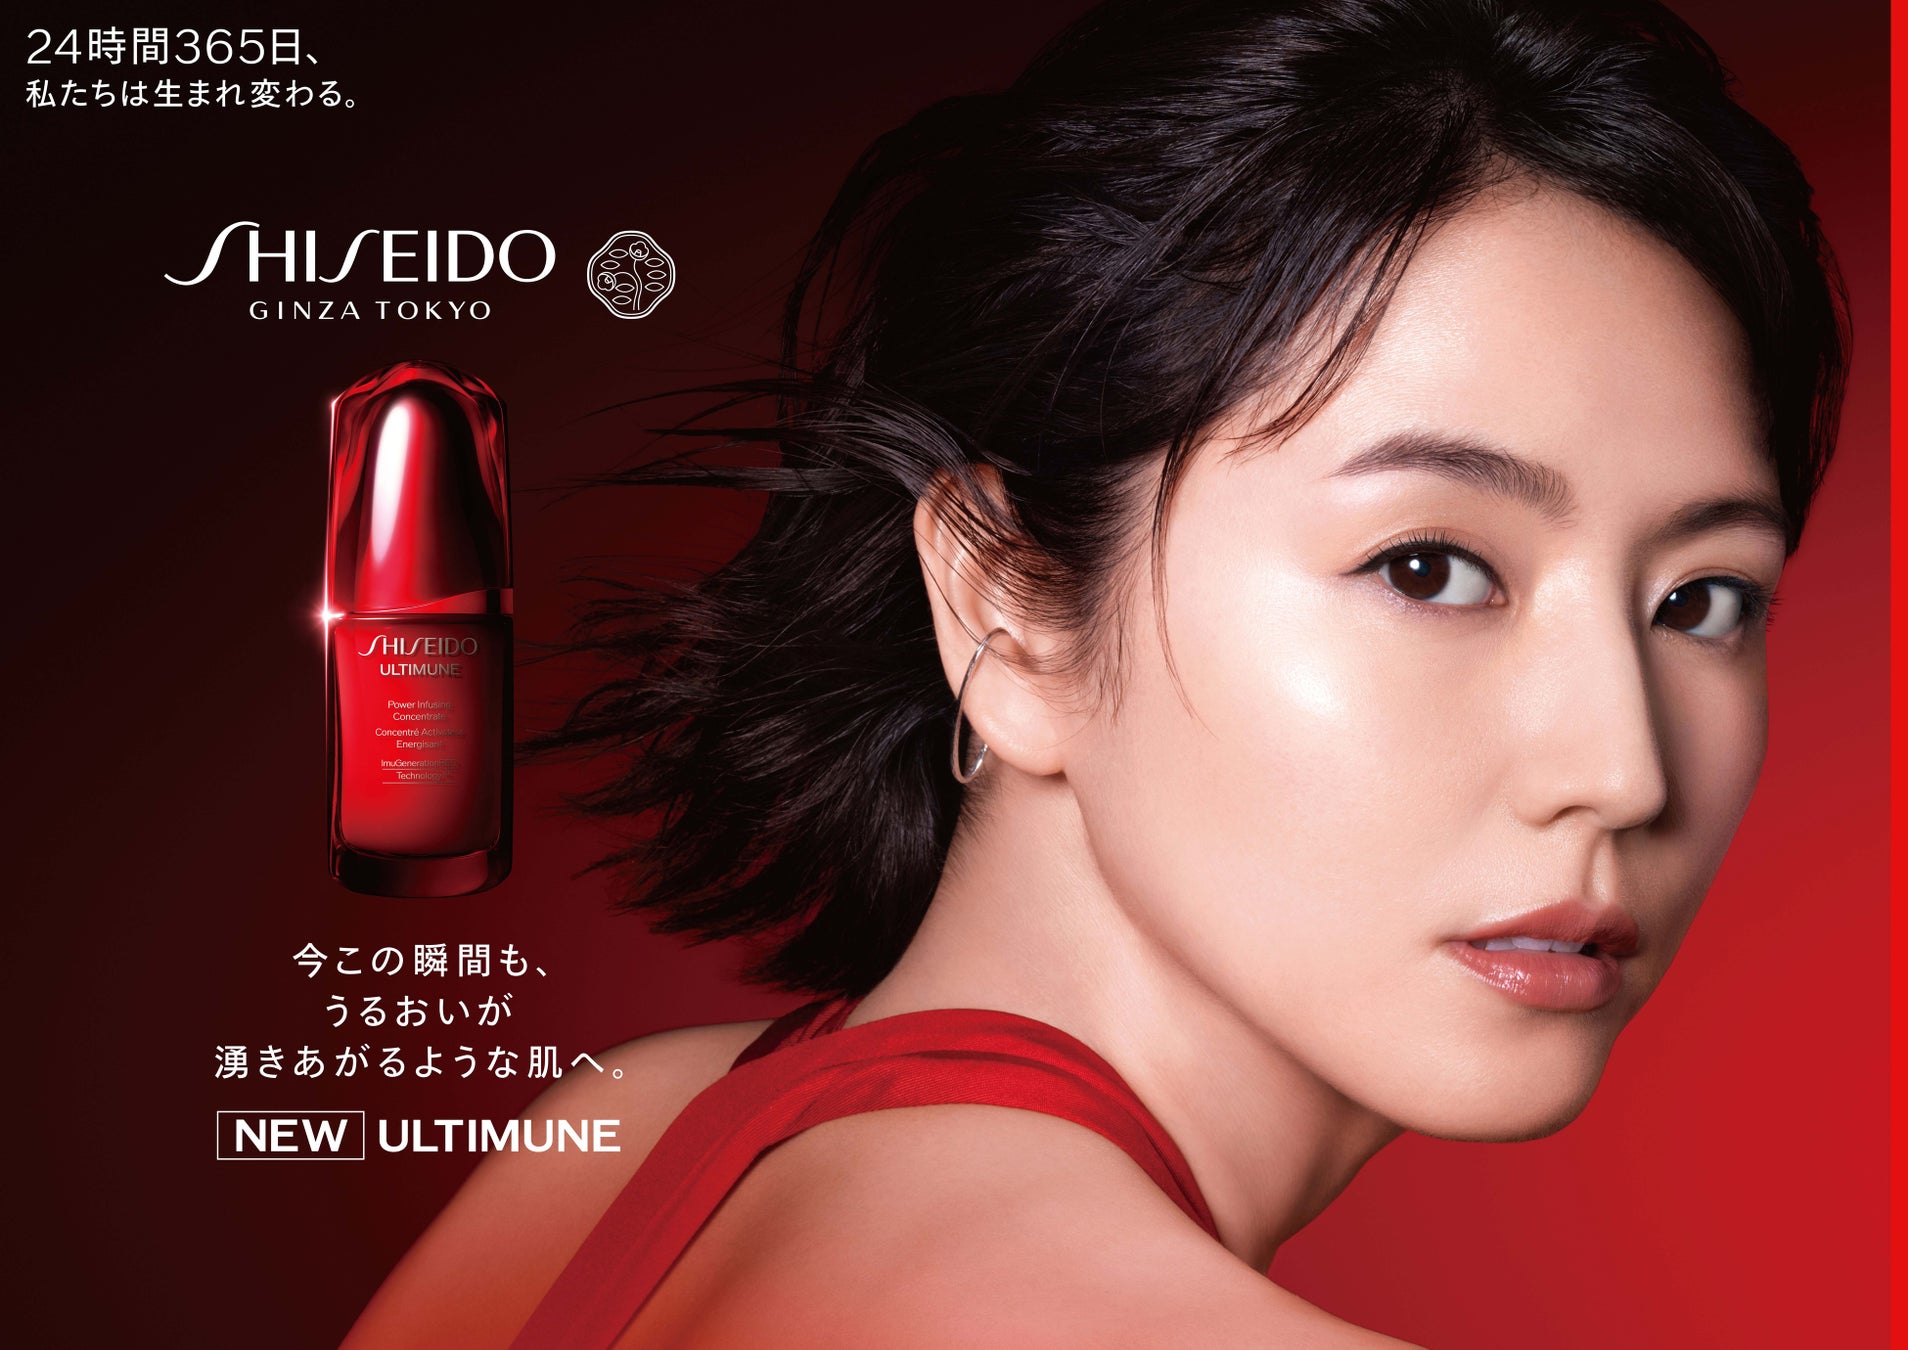 「shiseido」ブランドアンバサダーに長澤まさみさんが就任 24時間365日。美しさを更新。未来へ。「アルティミューン」新cmで、長澤まさみさんが美しさの新境地へ ビューティーポスト 